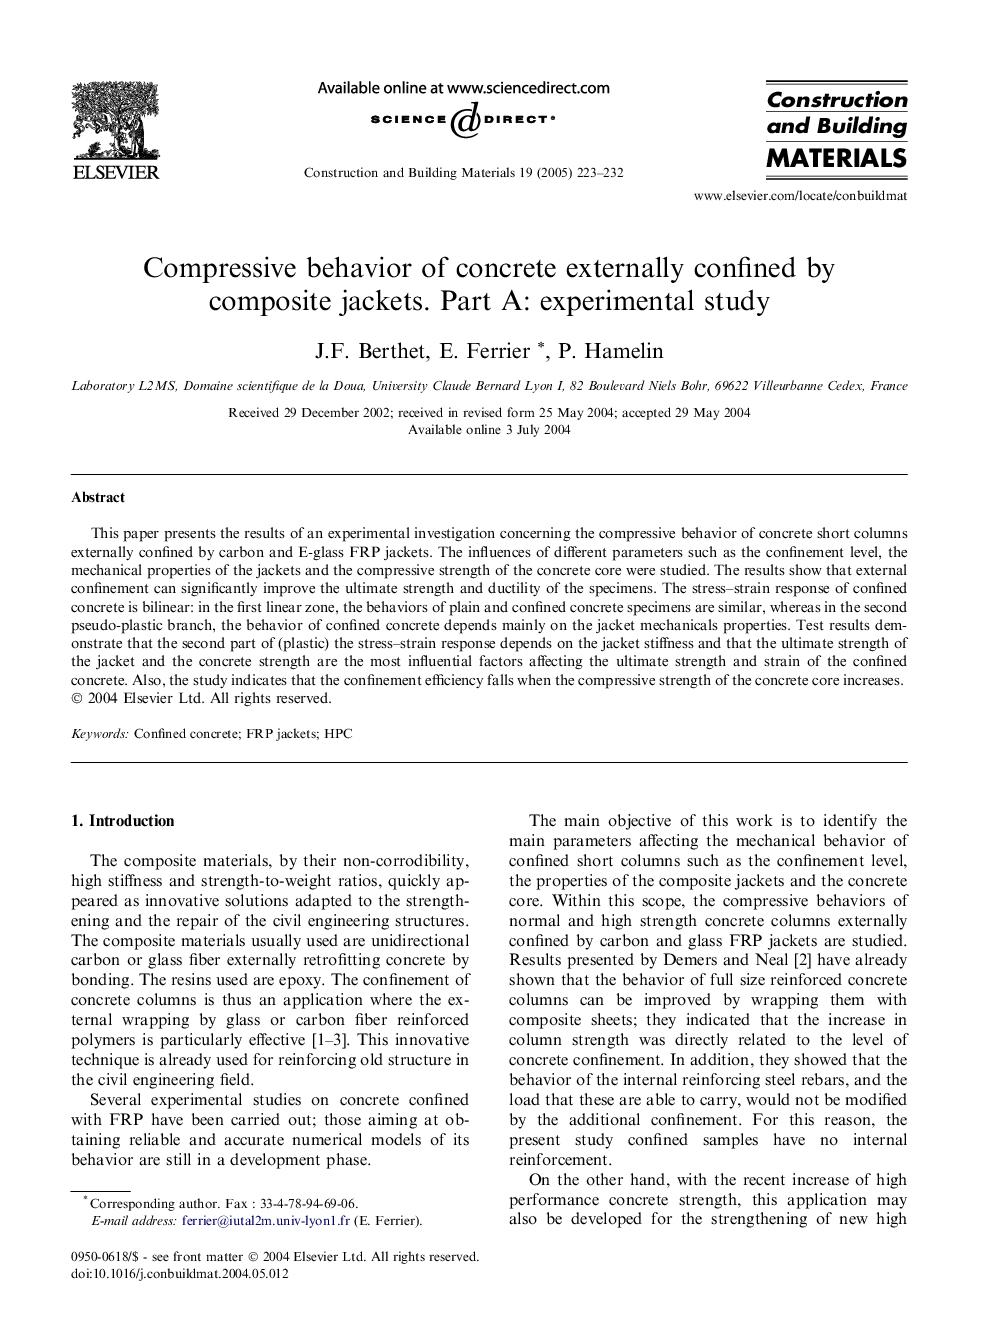 Compressive behavior of concrete externally confined by composite jackets. Part A: experimental study